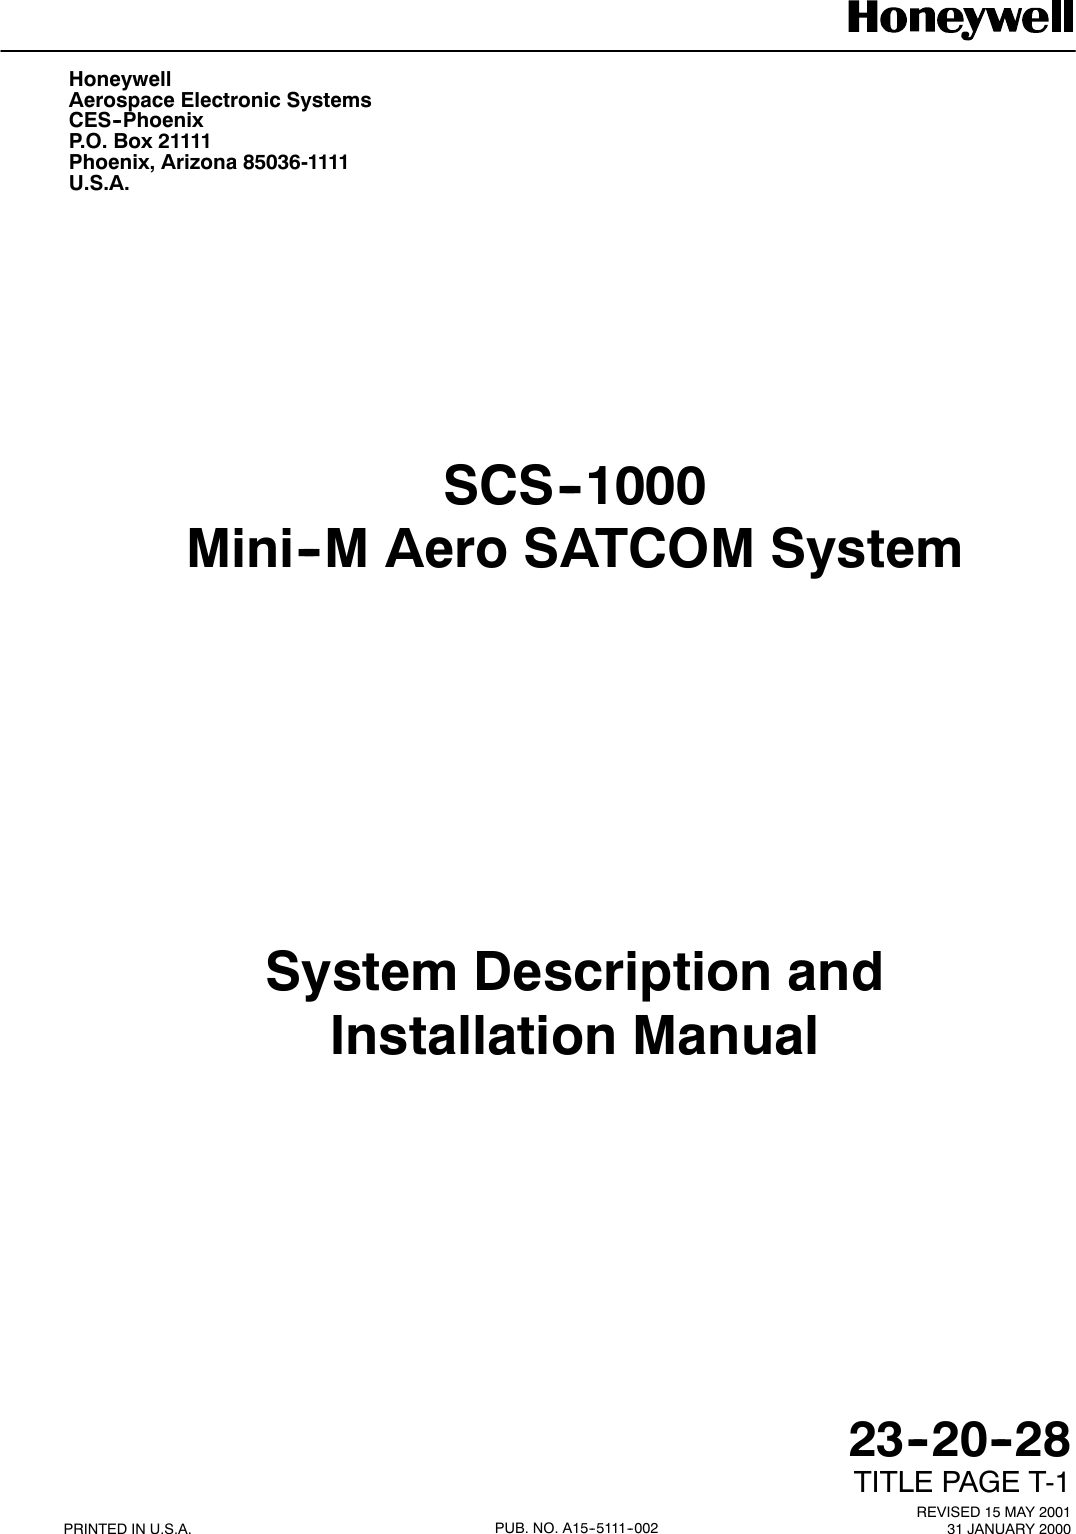 HoneywellAerospace Electronic SystemsCES--PhoenixP.O. Box 21111Phoenix, Arizona 85036-1111U.S.A.REVISED 15 MAY 200131 JANUARY 200023--20--28TITLE PAGE T-1PRINTED IN U.S.A. PUB. NO. A15--5111--002SCS--1000Mini--M Aero SATCOM SystemSystem Description andInstallation Manual